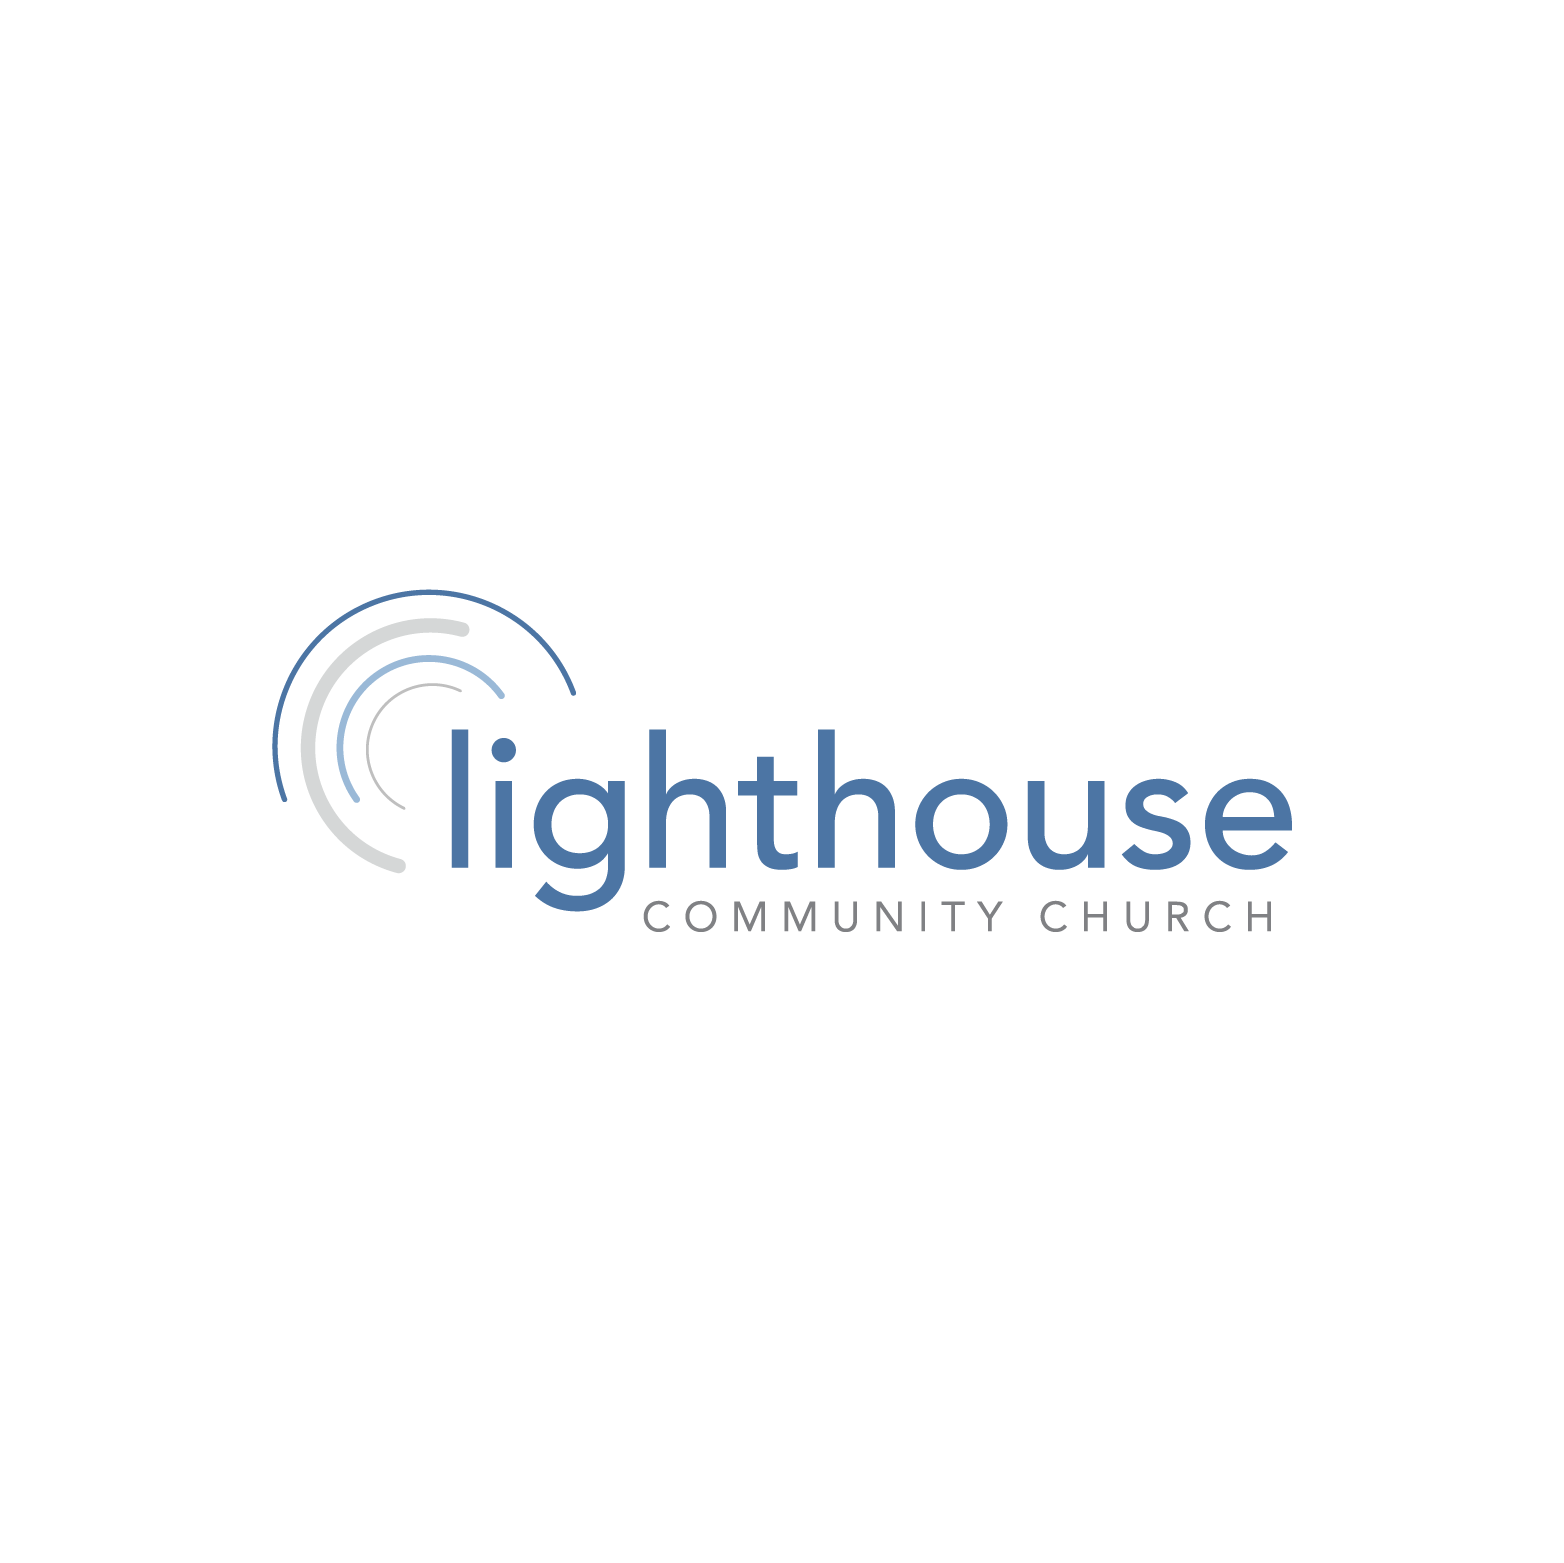 Lighthouse Community Church logo